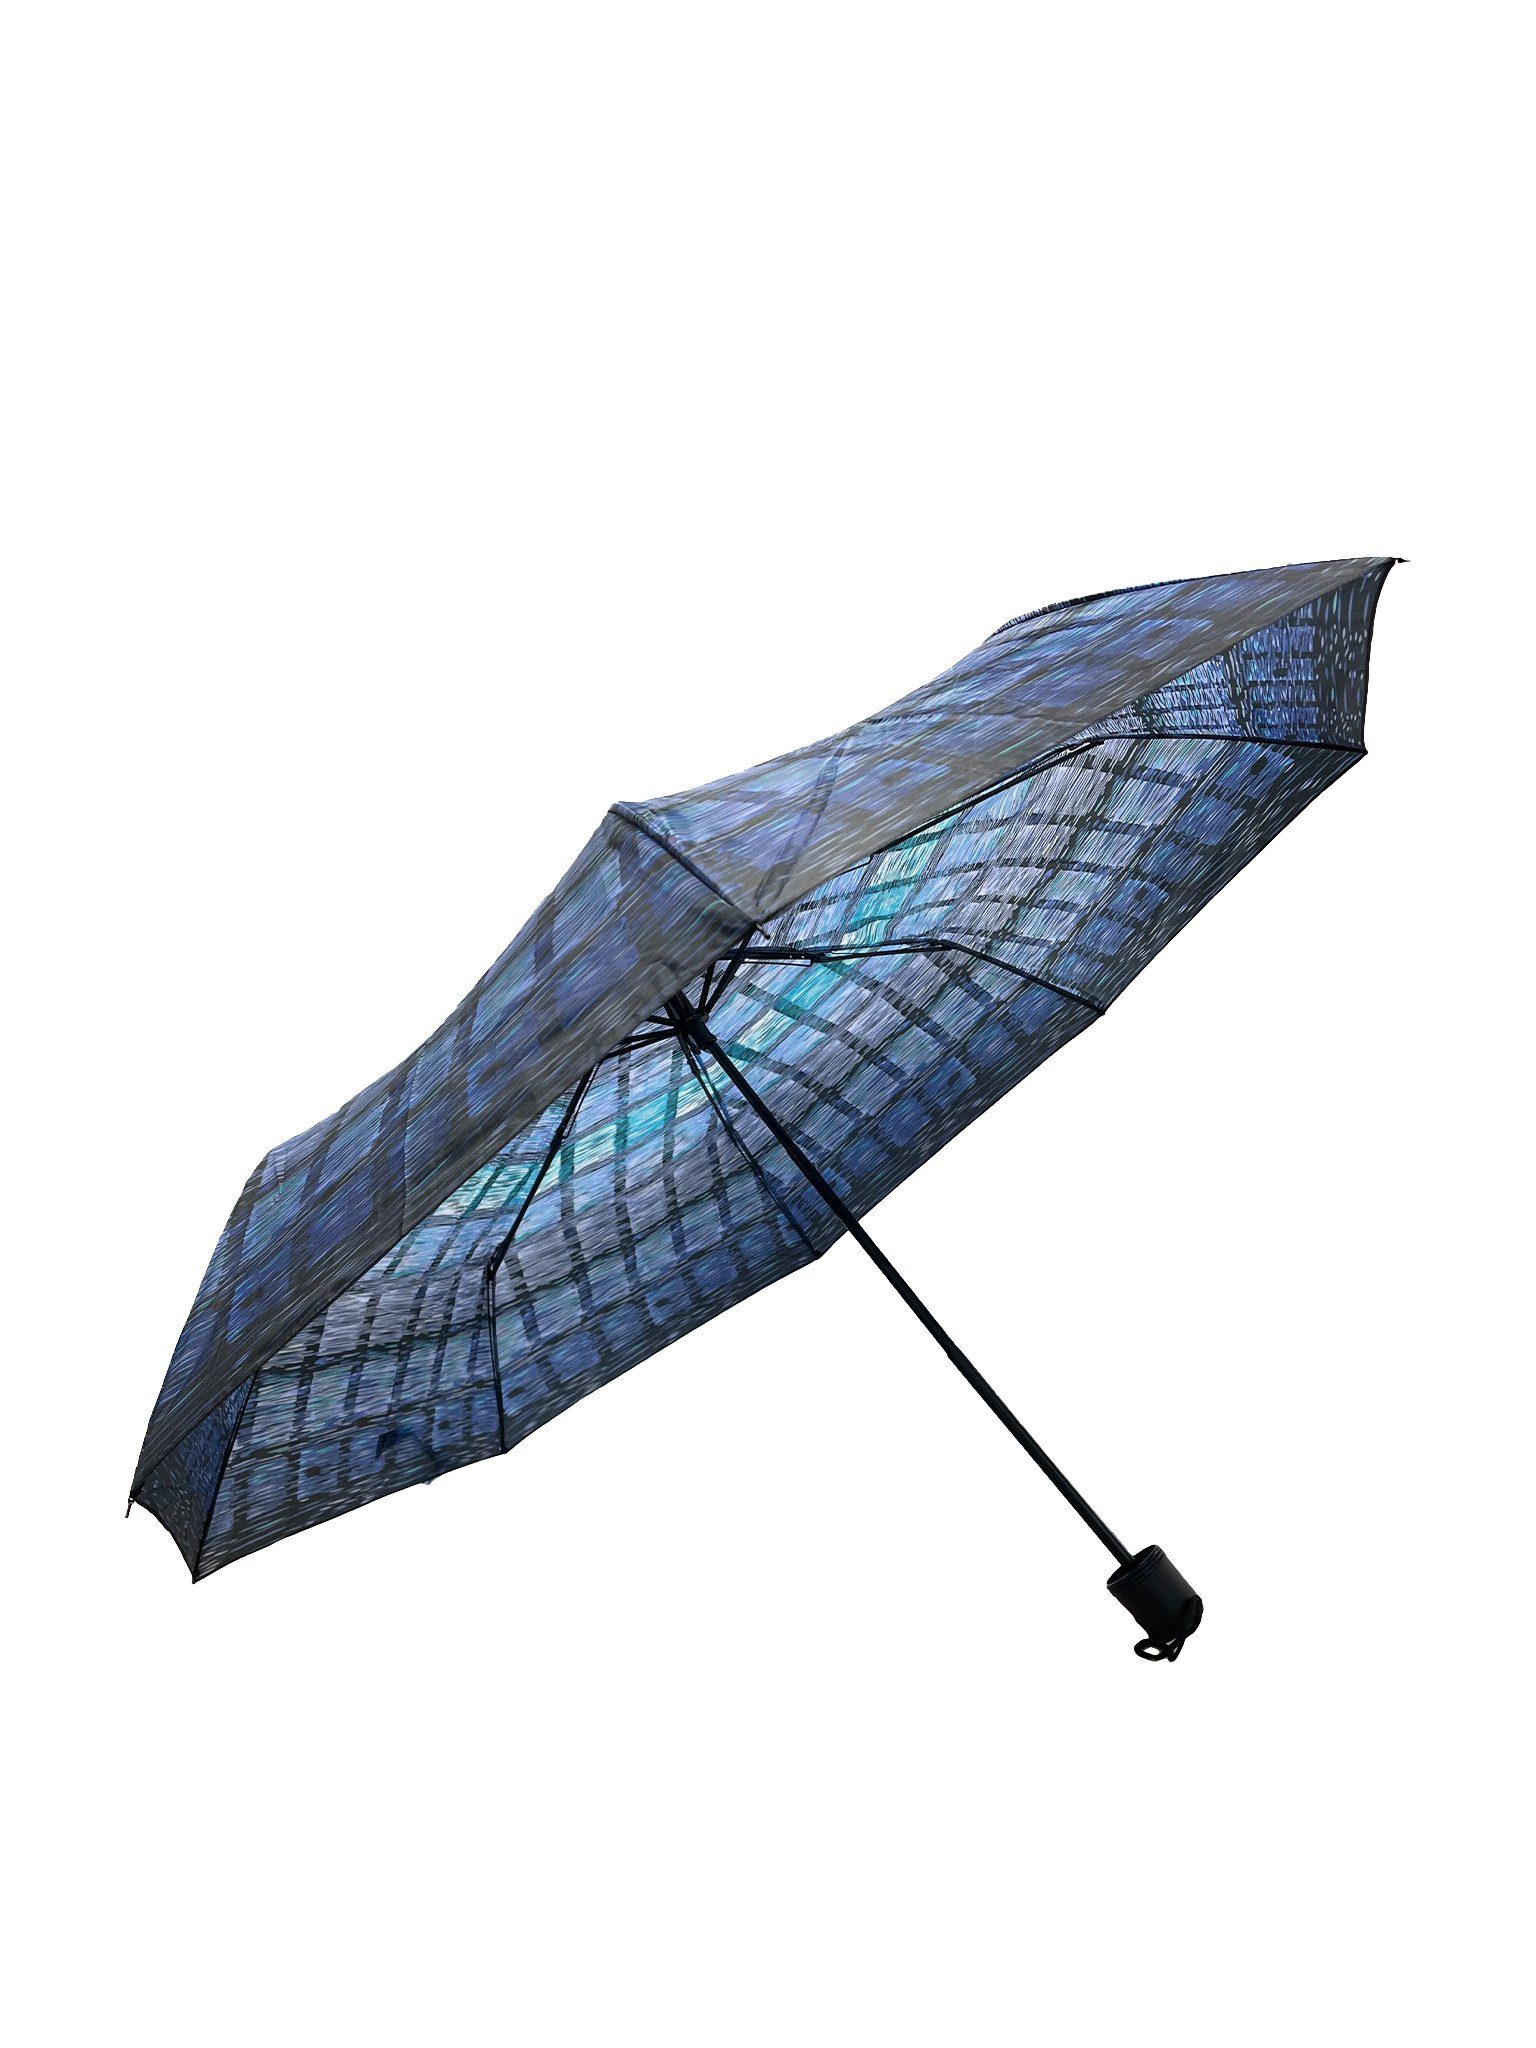 ANELY Taschenregenschirm Kleiner Regenschirm Paris Gemustert Taschenschirm, 6746 in Türkis